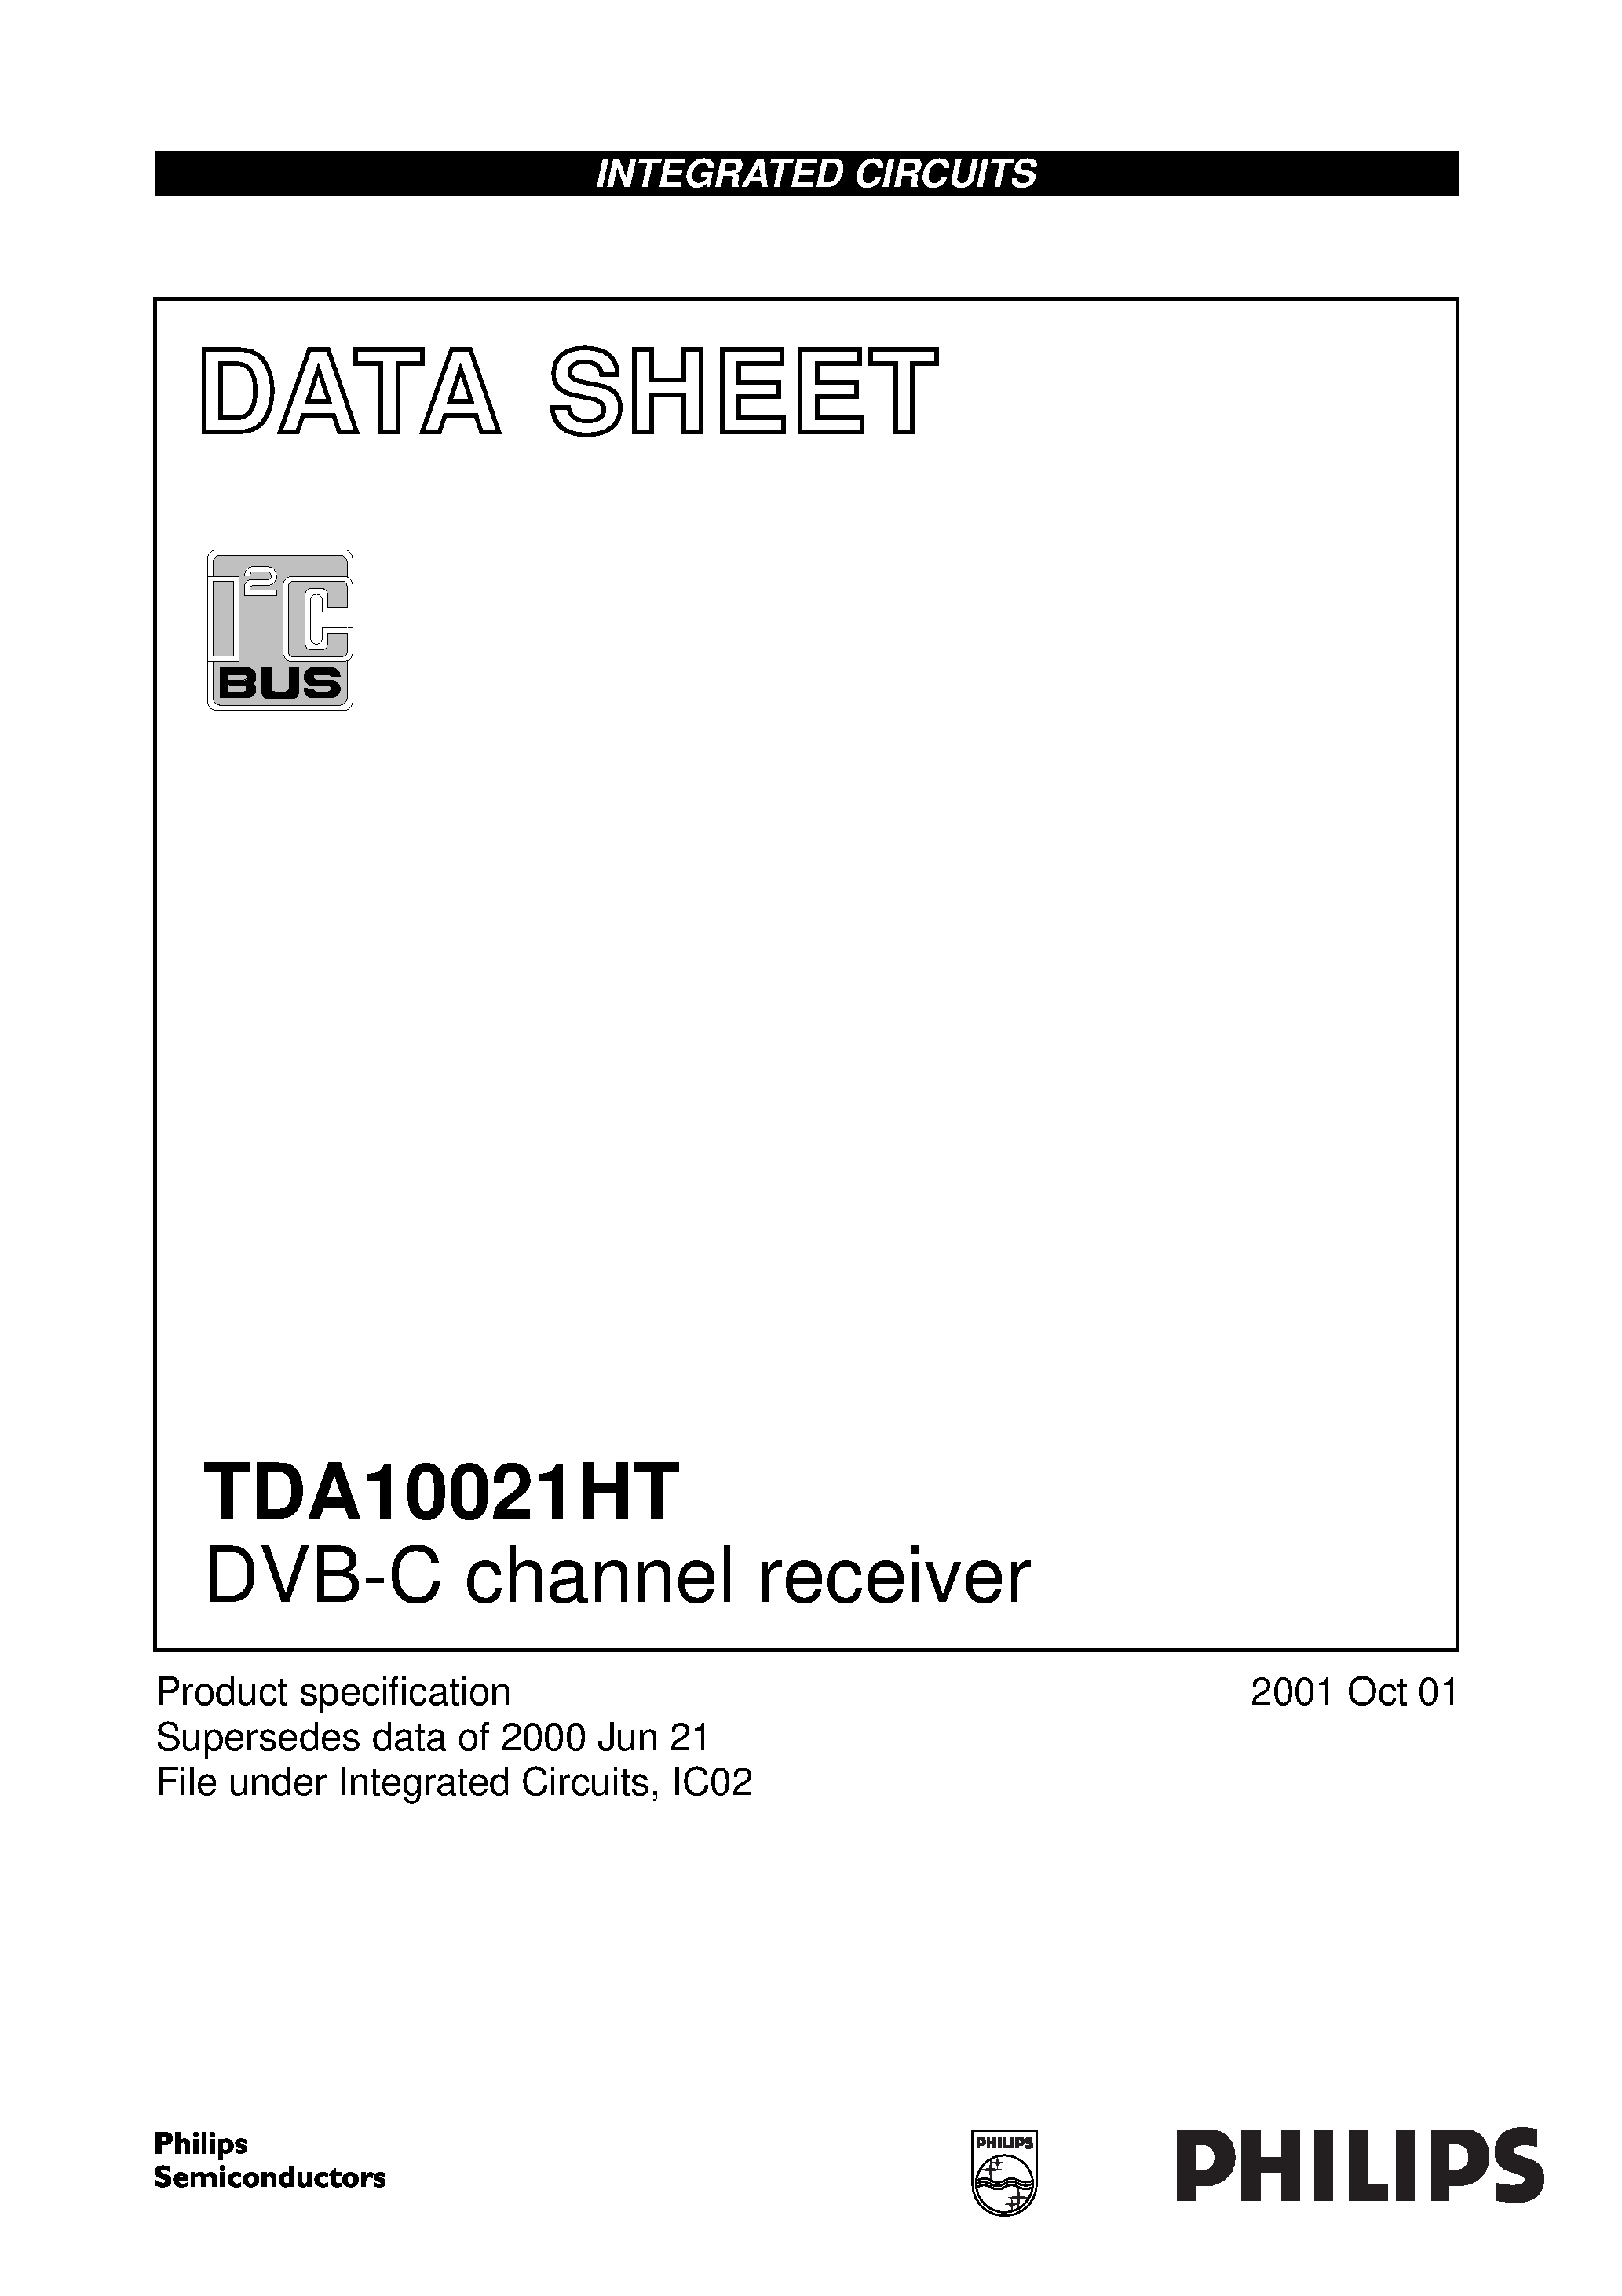 Даташит TDA10021 - DVB-C channel receiver страница 1